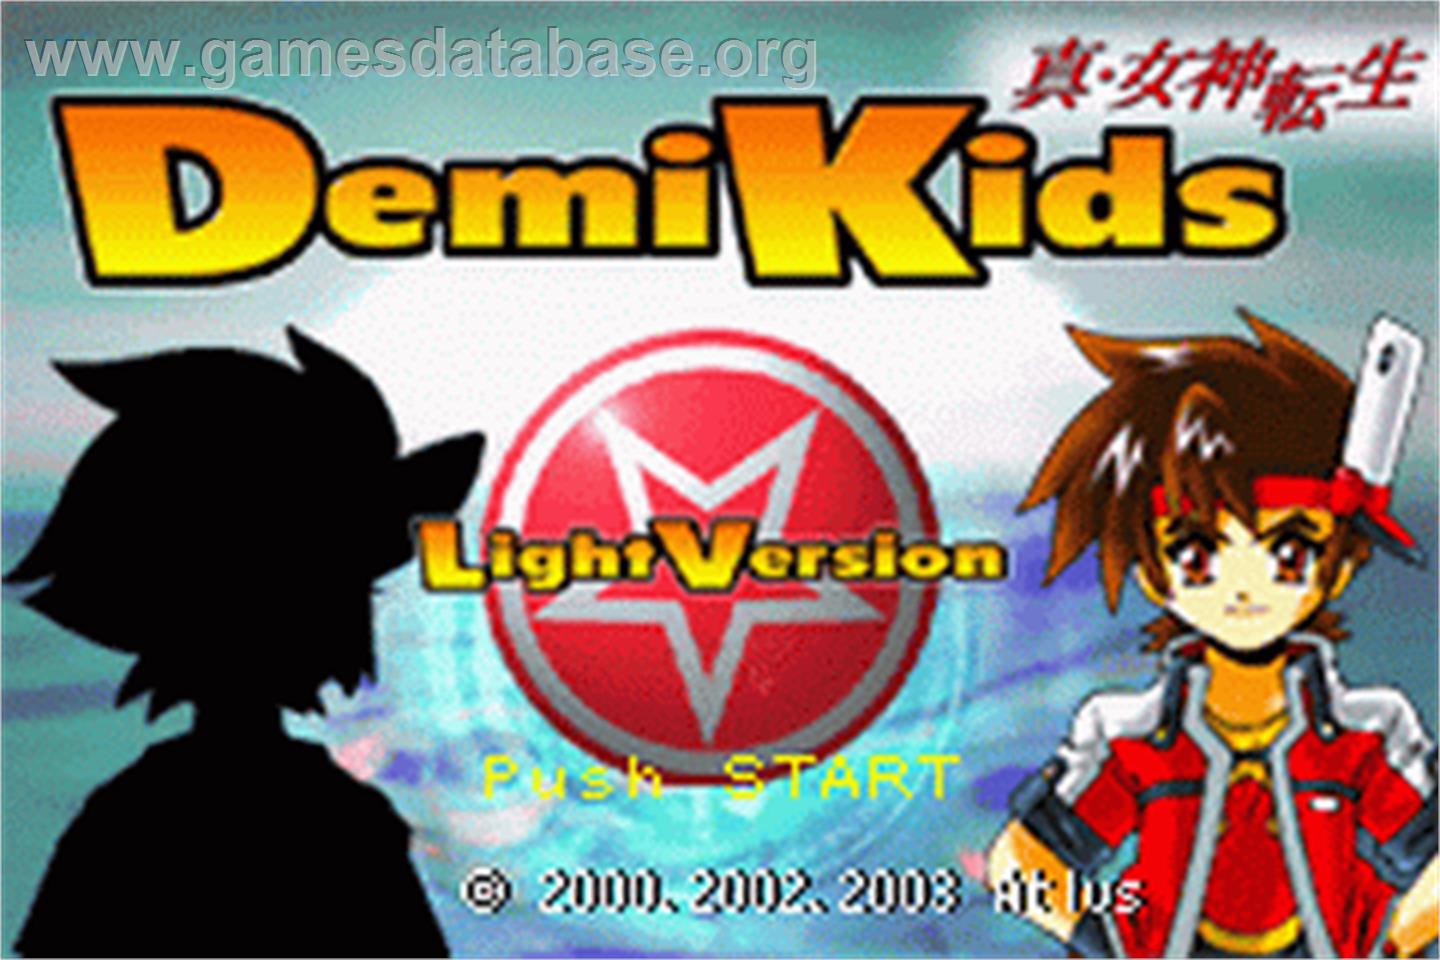 DemiKids: Light Version - Nintendo Game Boy Advance - Artwork - Title Screen